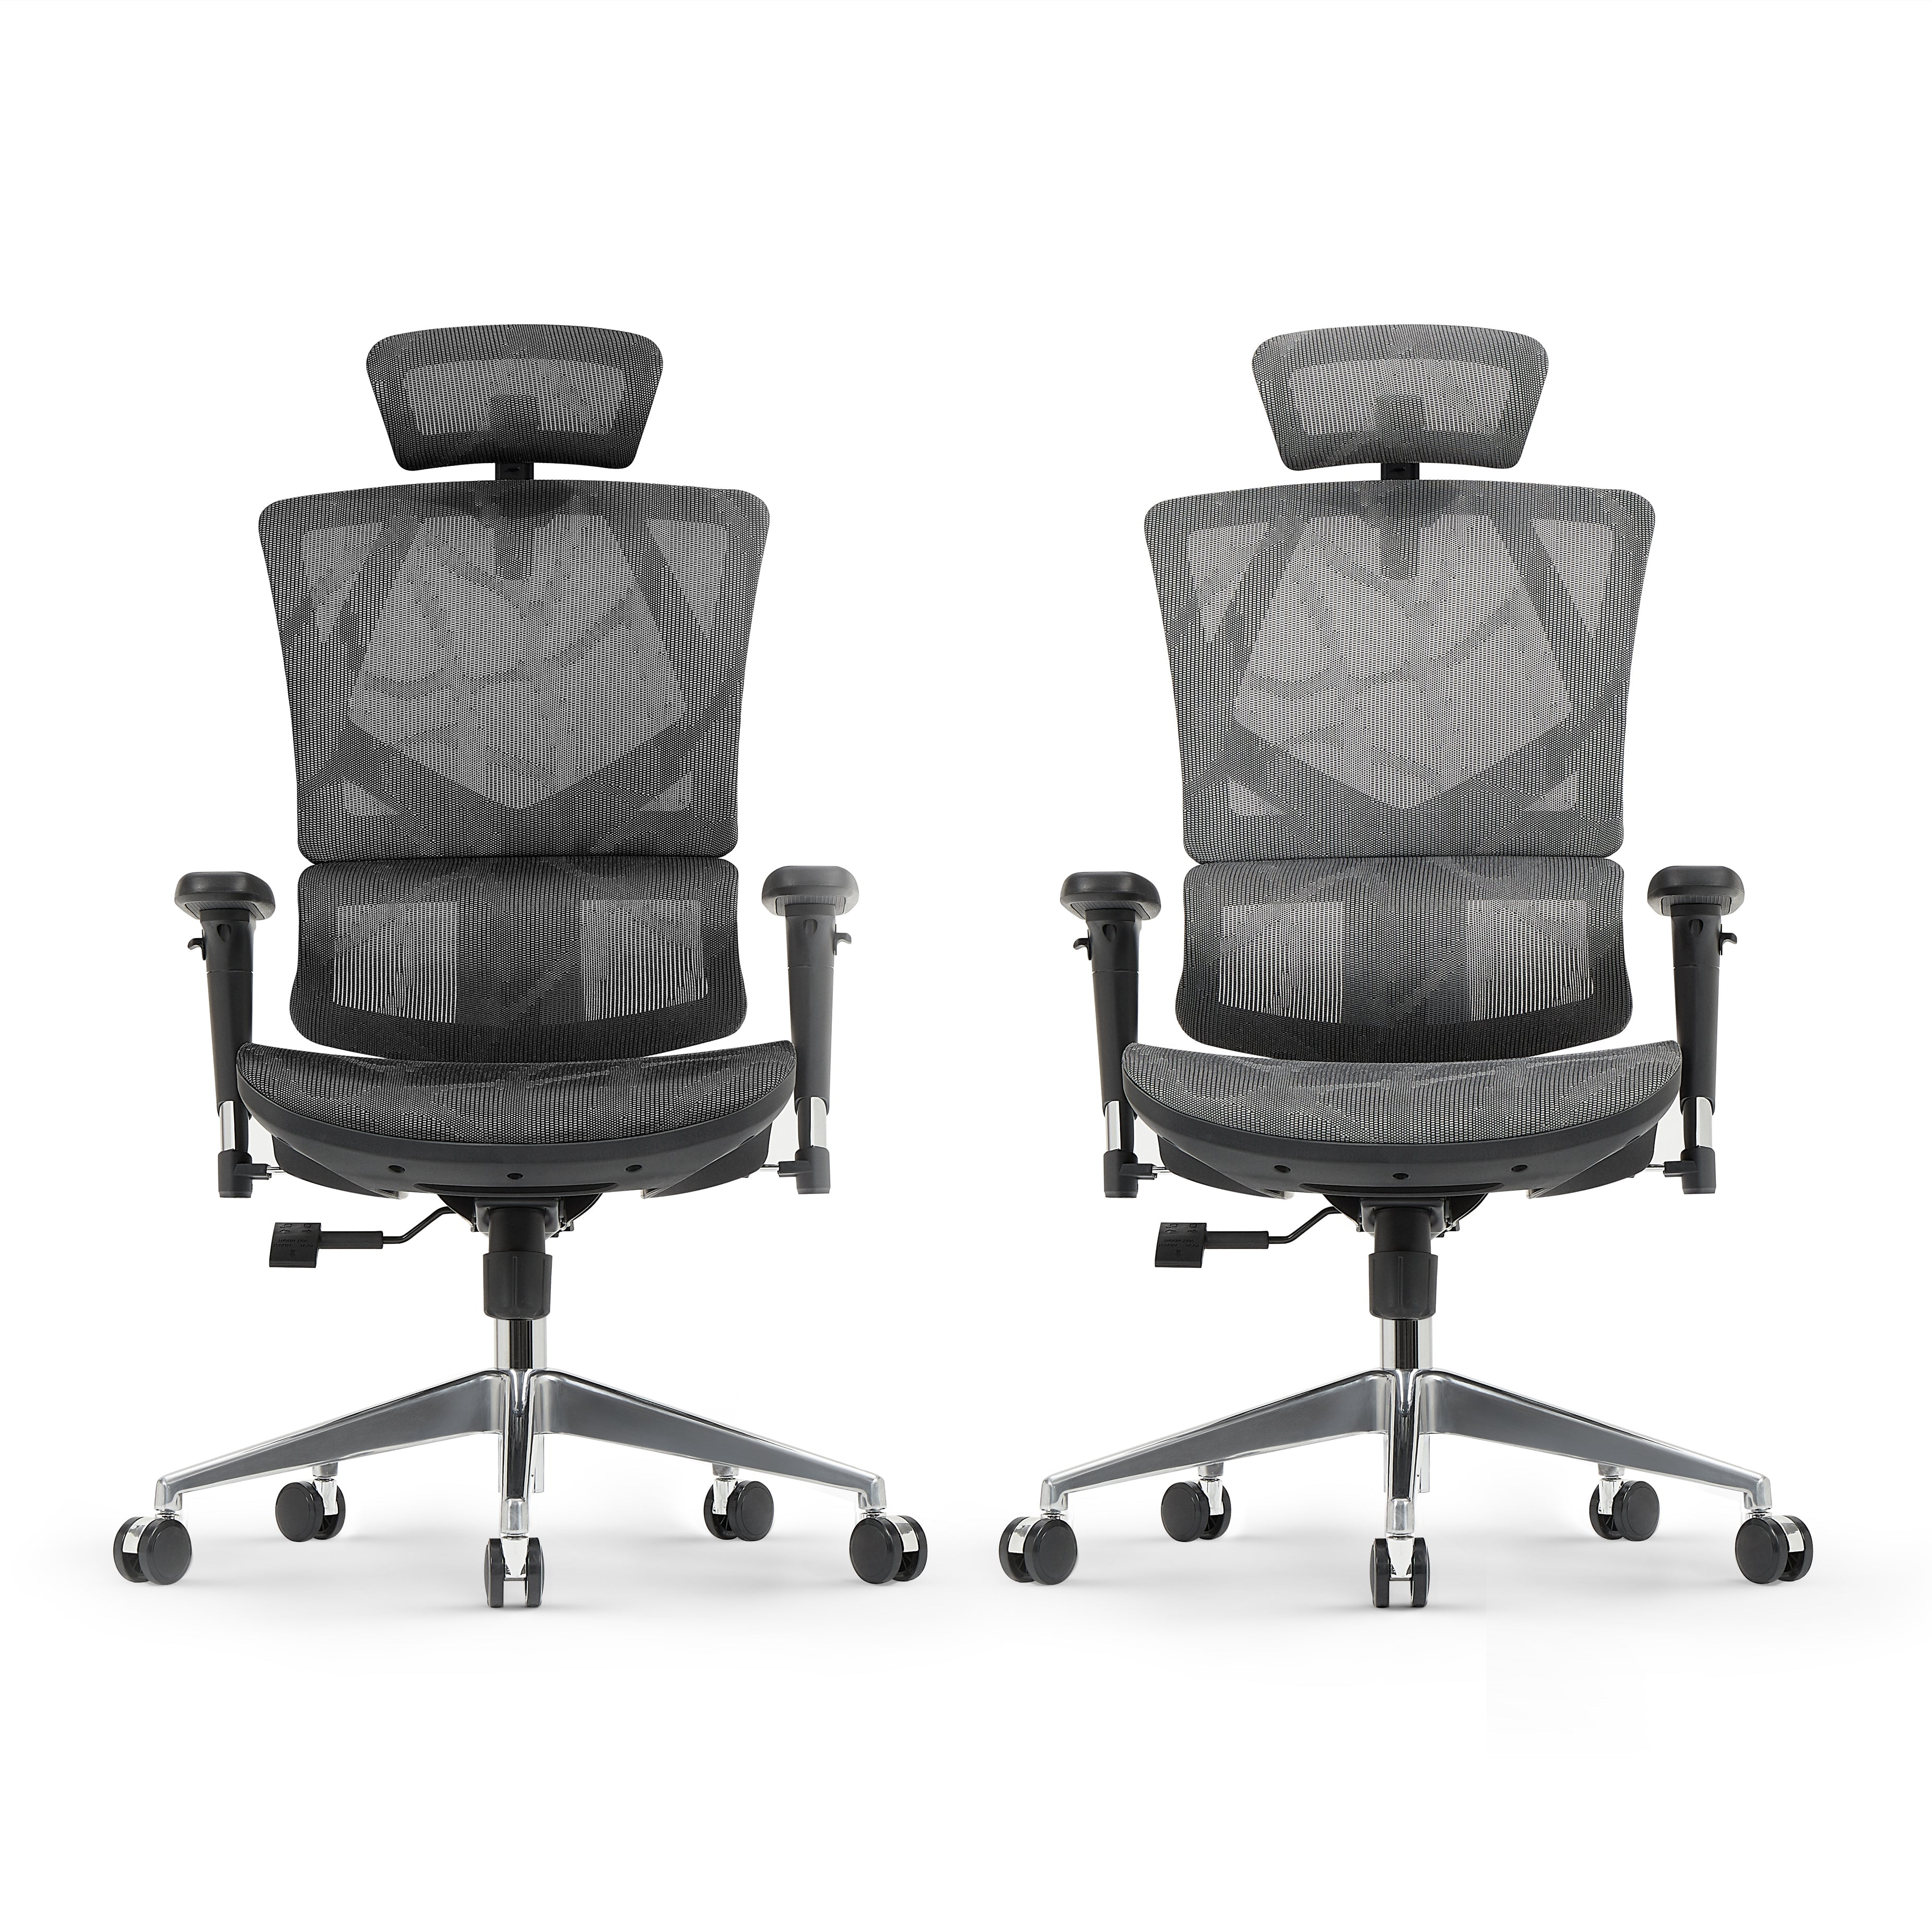 M90C Ergonomic home office chair